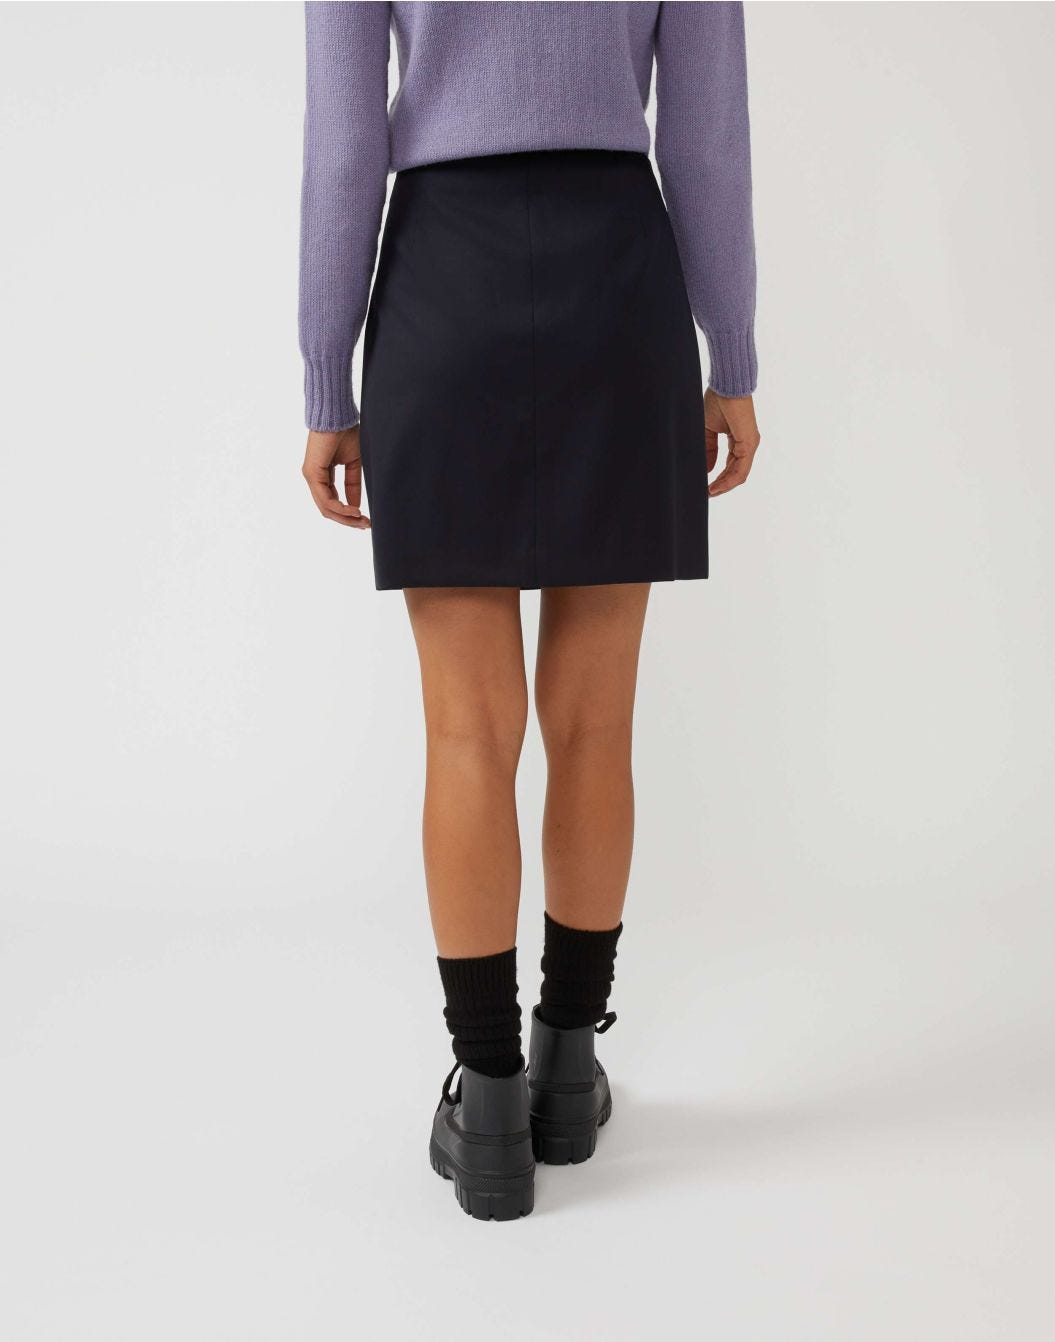 Blue woollen mini skirt with size-zip closure